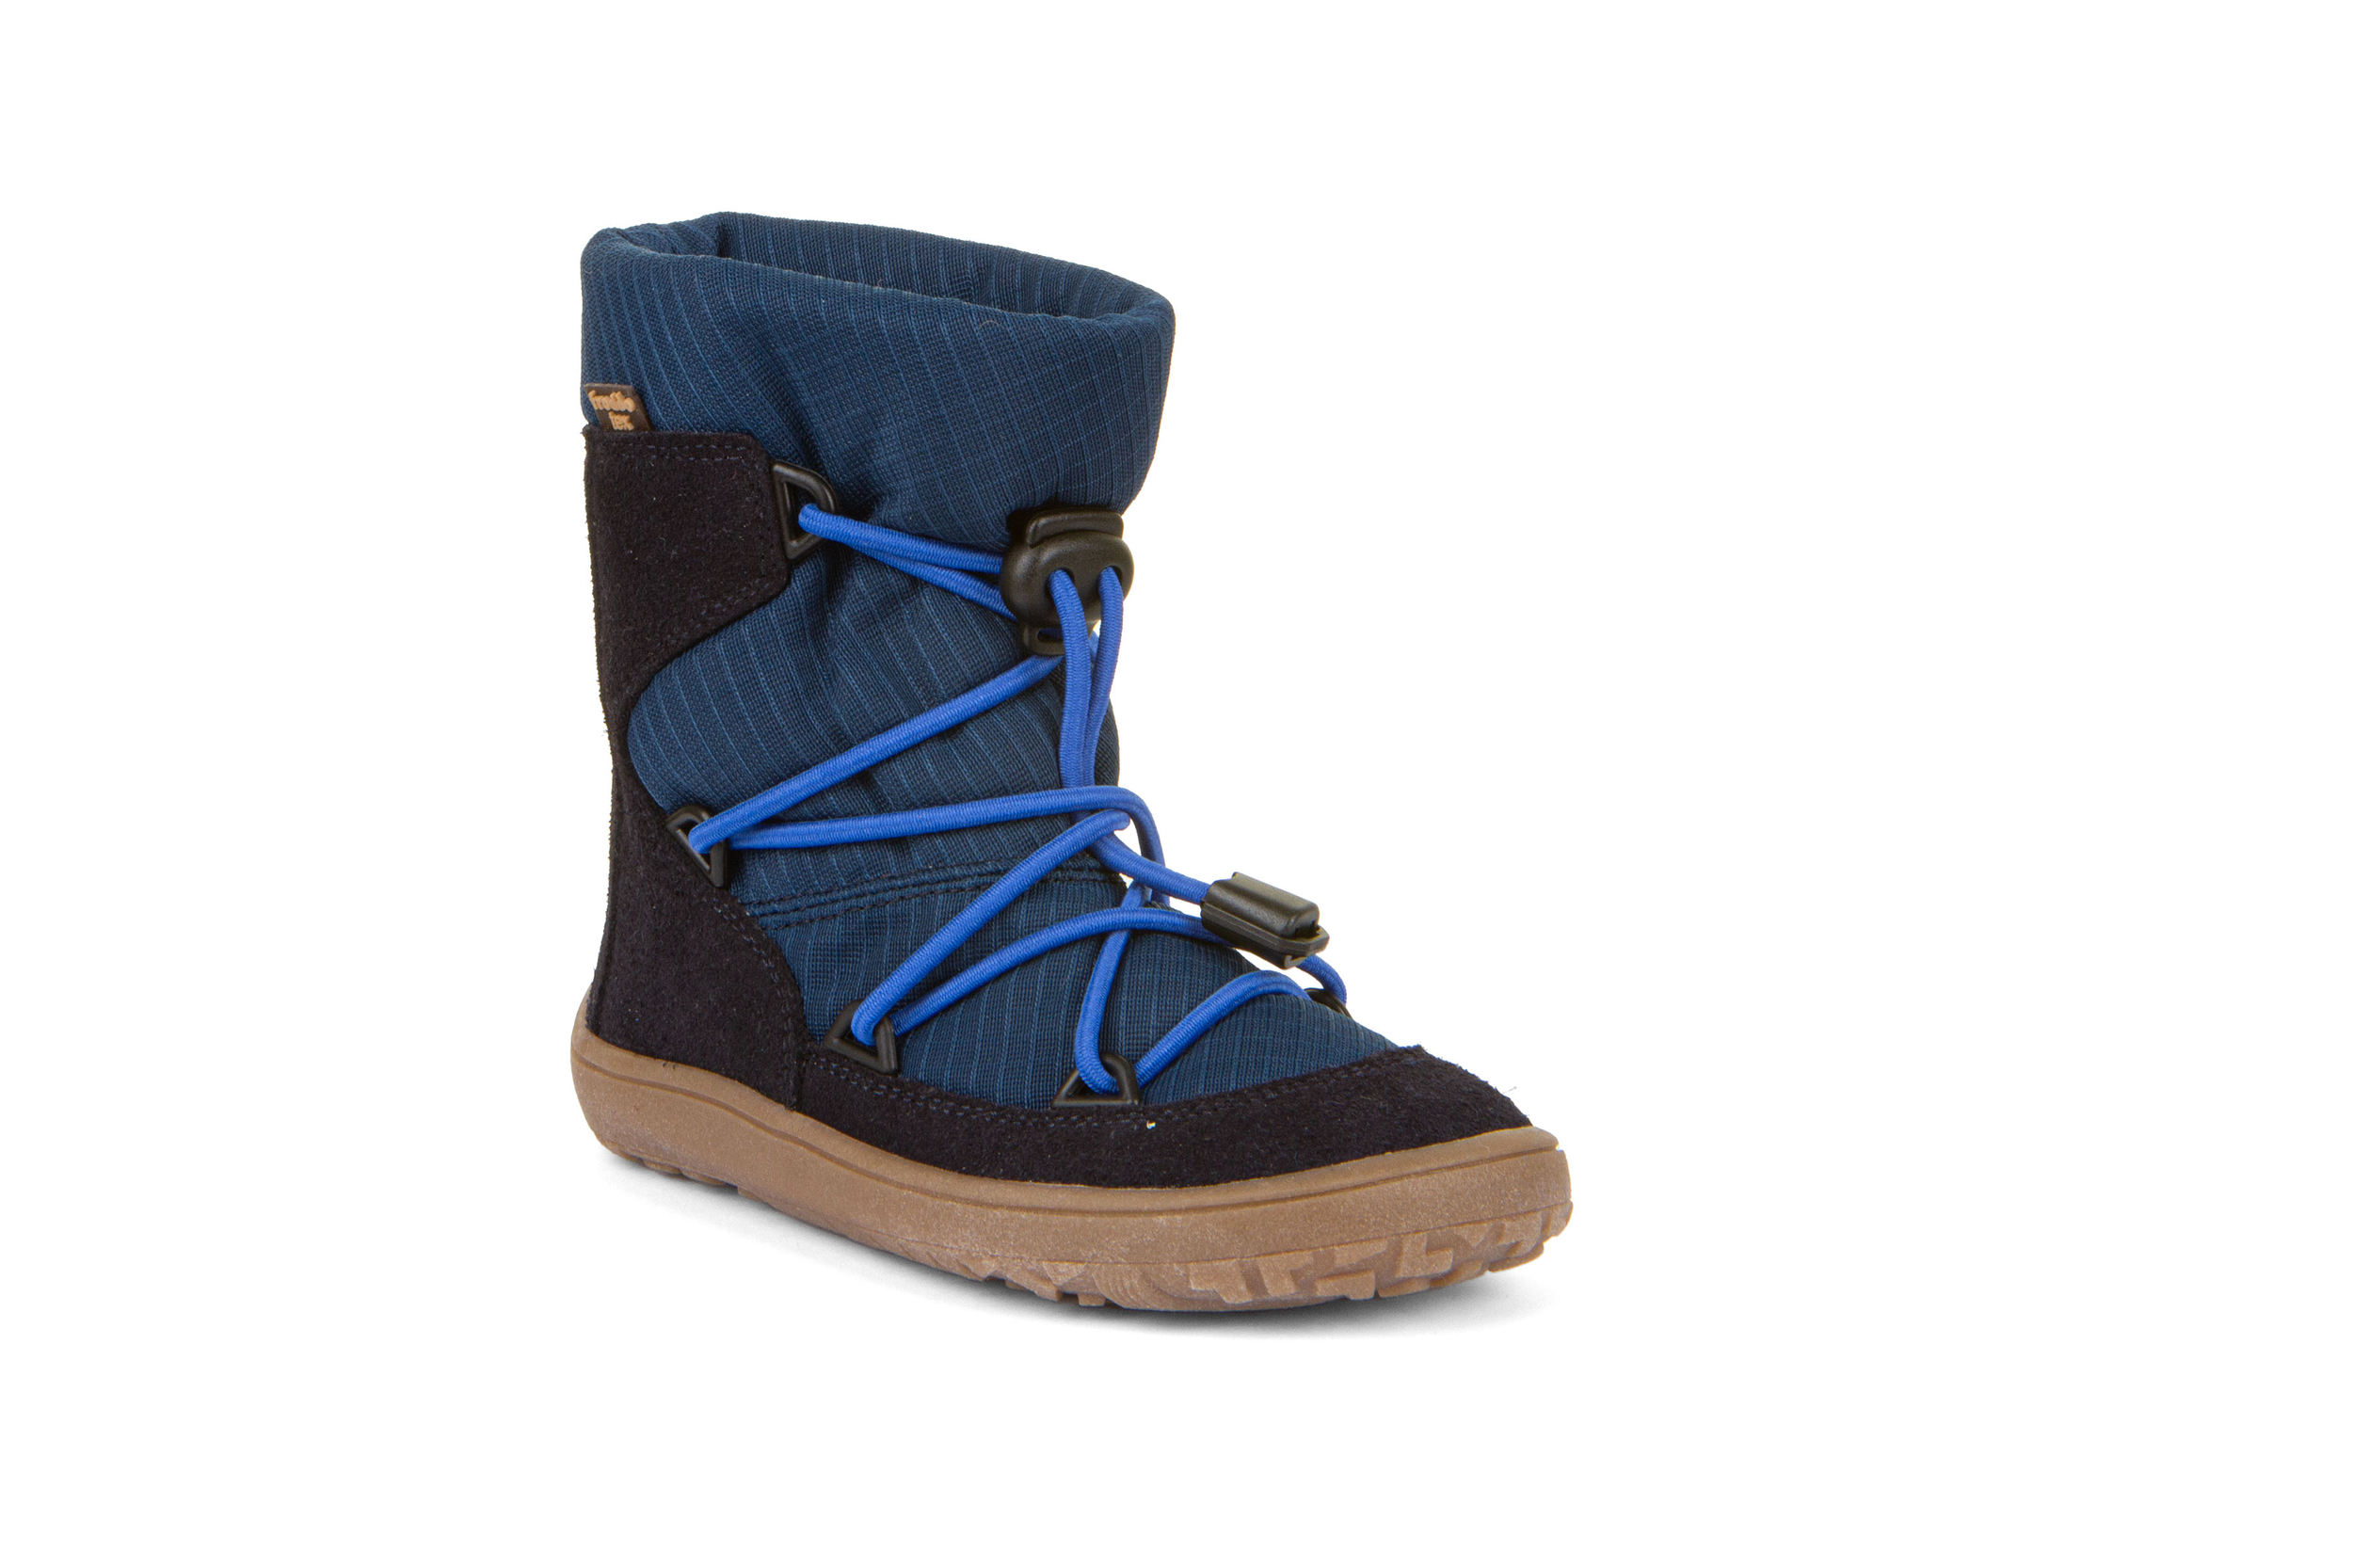 Bottes de neige TEX TRACK WOOL Froddo barefoot - dark blue - G3160212-1